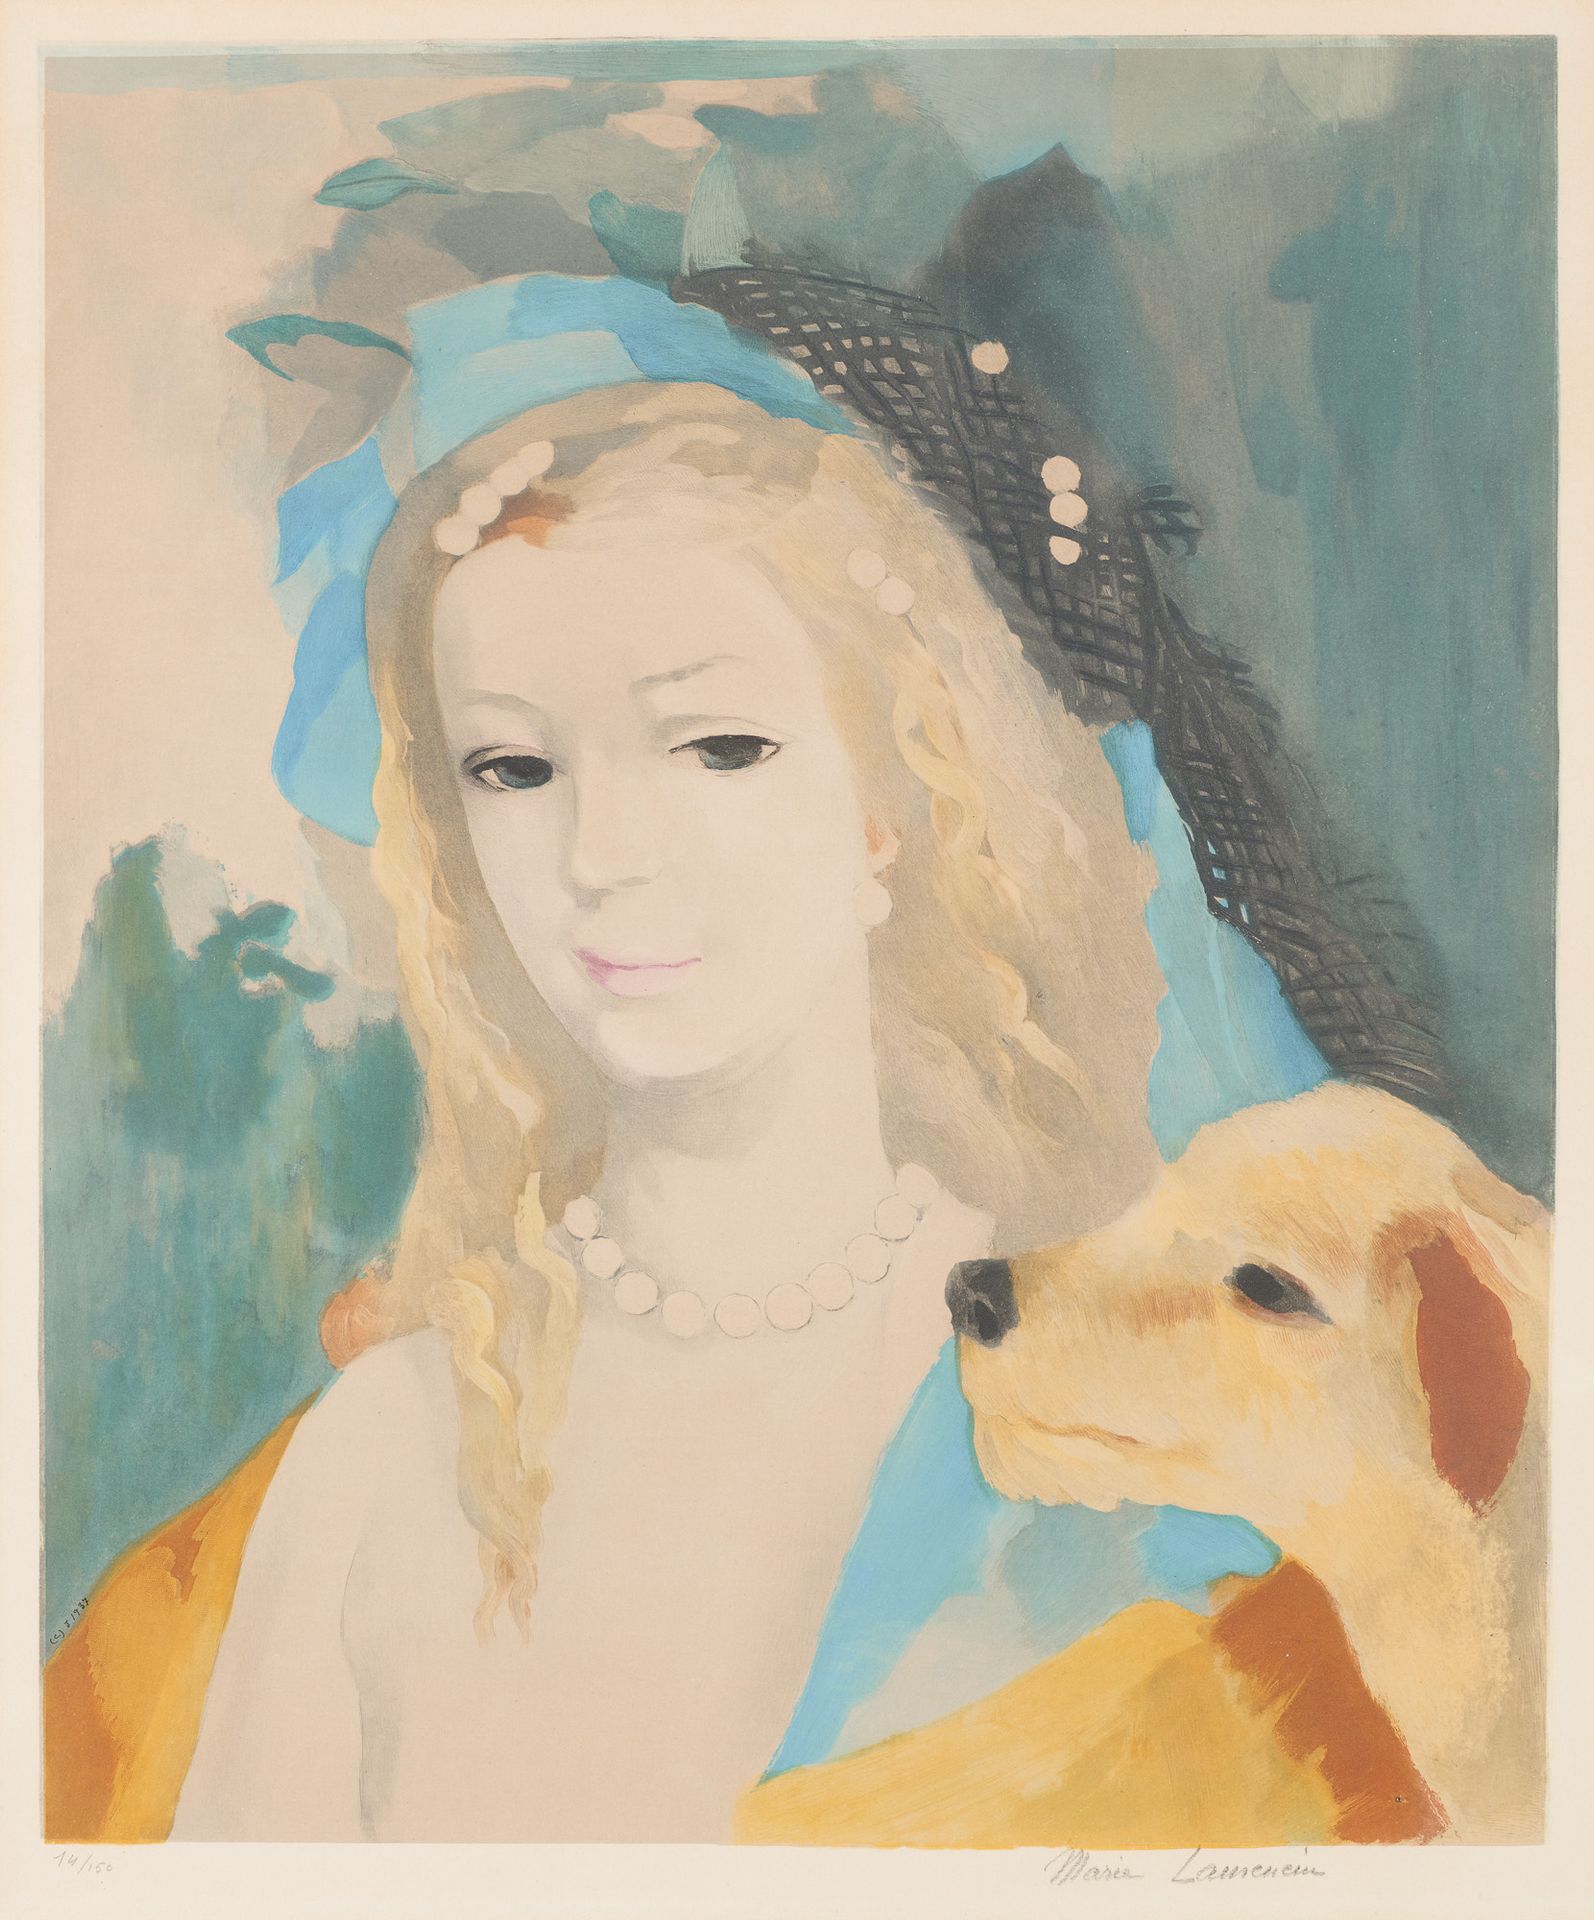 Marie LAURENCIN École française (1883-1956) 印刷品，纸上彩色平版画：年轻女孩和她的狗。

版面外有签名：Marie &hellip;